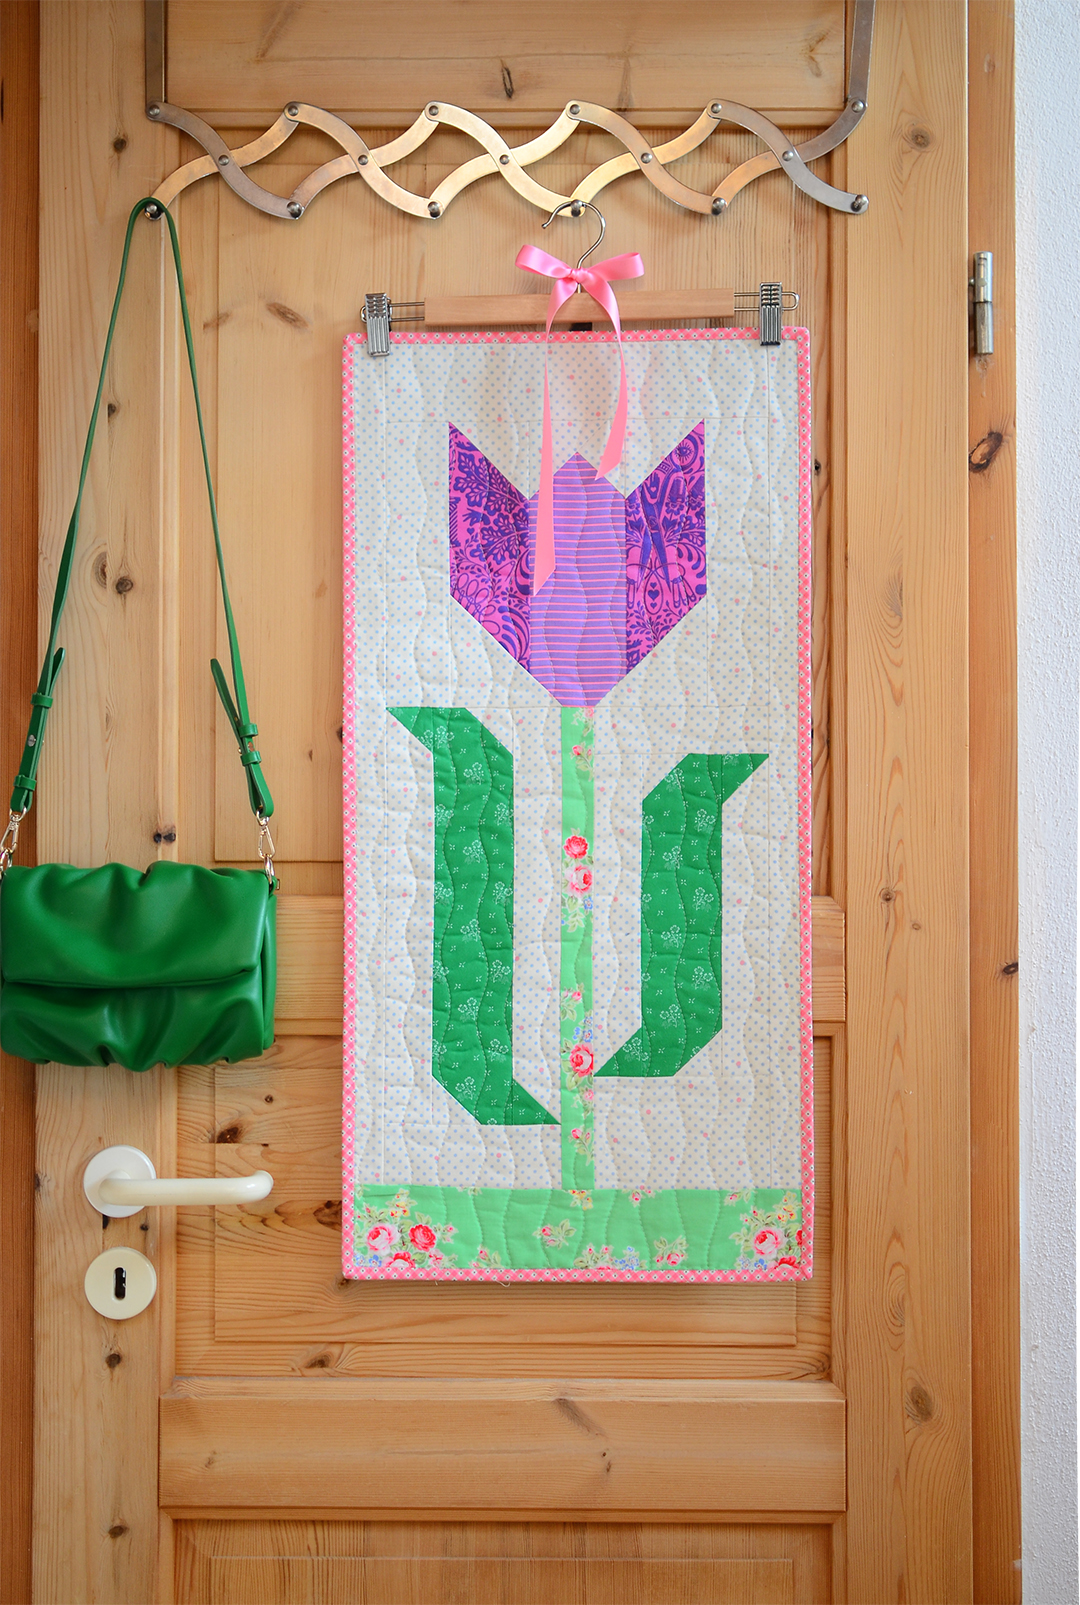 Tulip Wall Quilt - an easy quilt pattern by Nadra Ridgeway of ellis & higgs